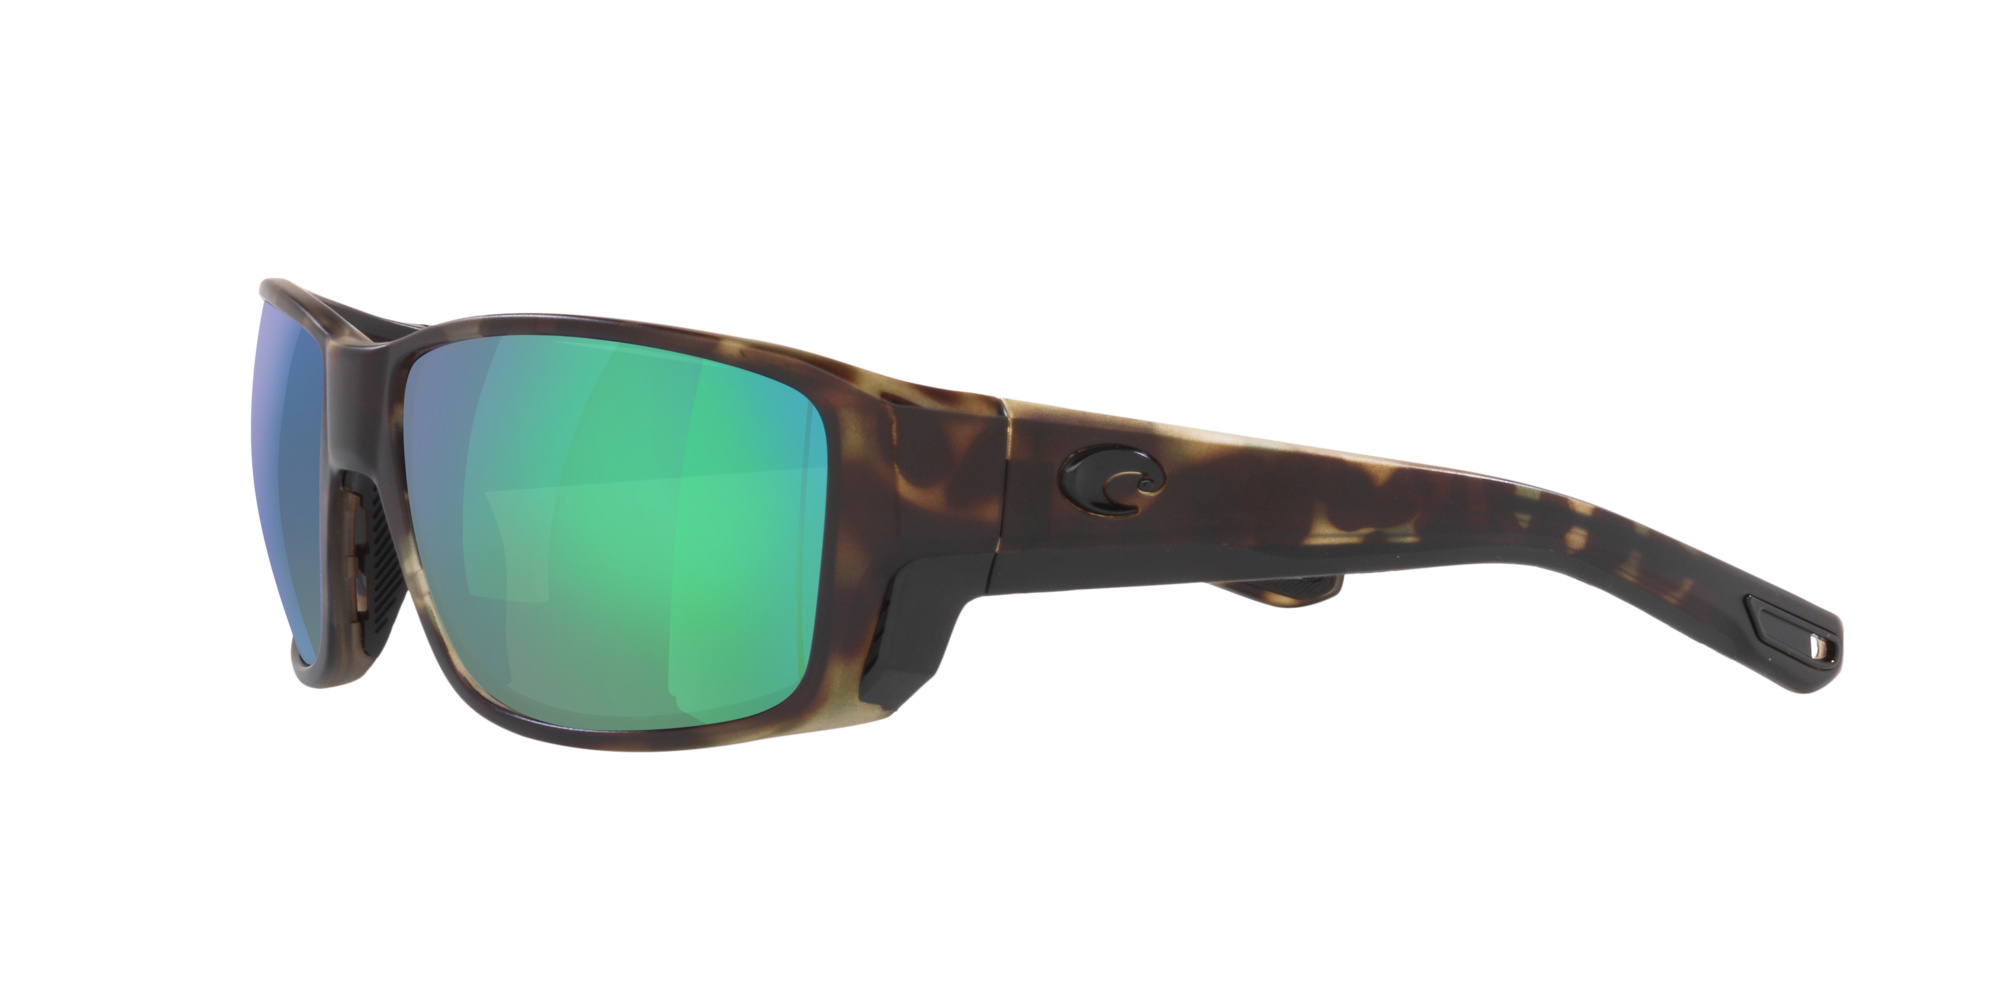 Costa Tuna Alley Omni Fit Sunglasses Tortoise Frame Global Fit Green Mirror Pro-Motion Distributing Direct TA10GFOGMP